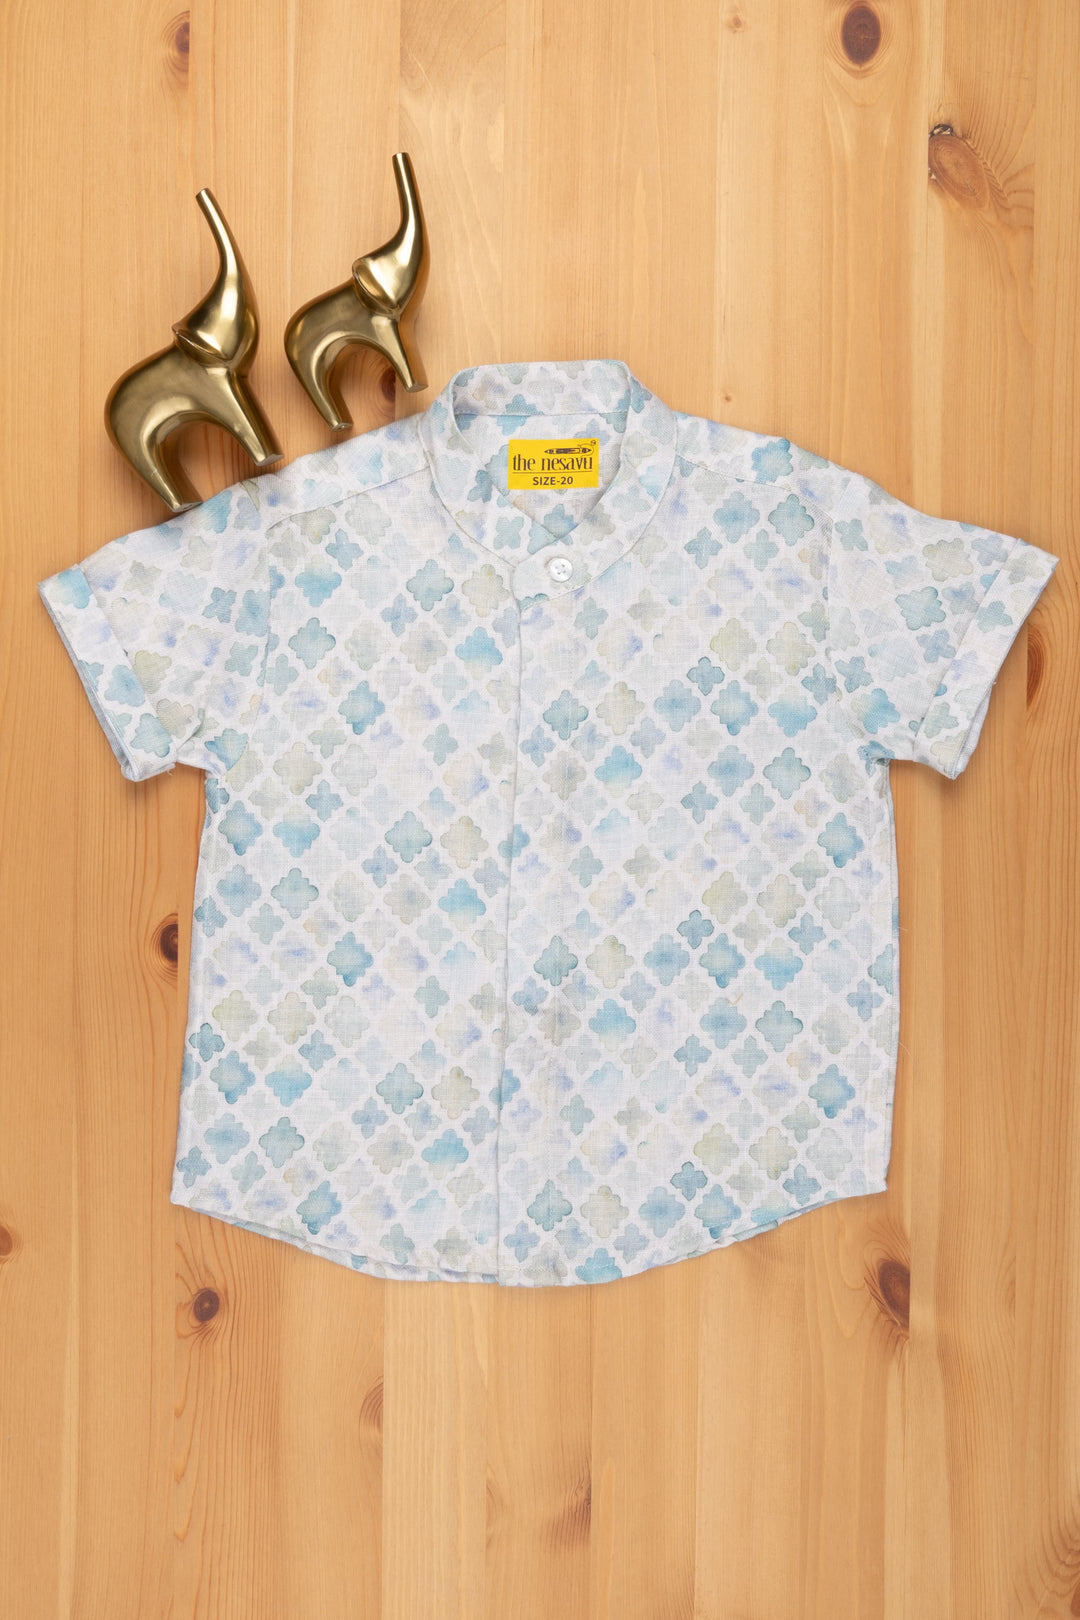 The Nesavu Boys Linen Shirt Linen Boys' Shirt with Geometric Prints for a Modern and Artistic Twist Nesavu 14 (6M) / multicolor / Linen BS065 Geometric Printed Linen Shirt | Baby Boys Casual Shirt | The Nesavu